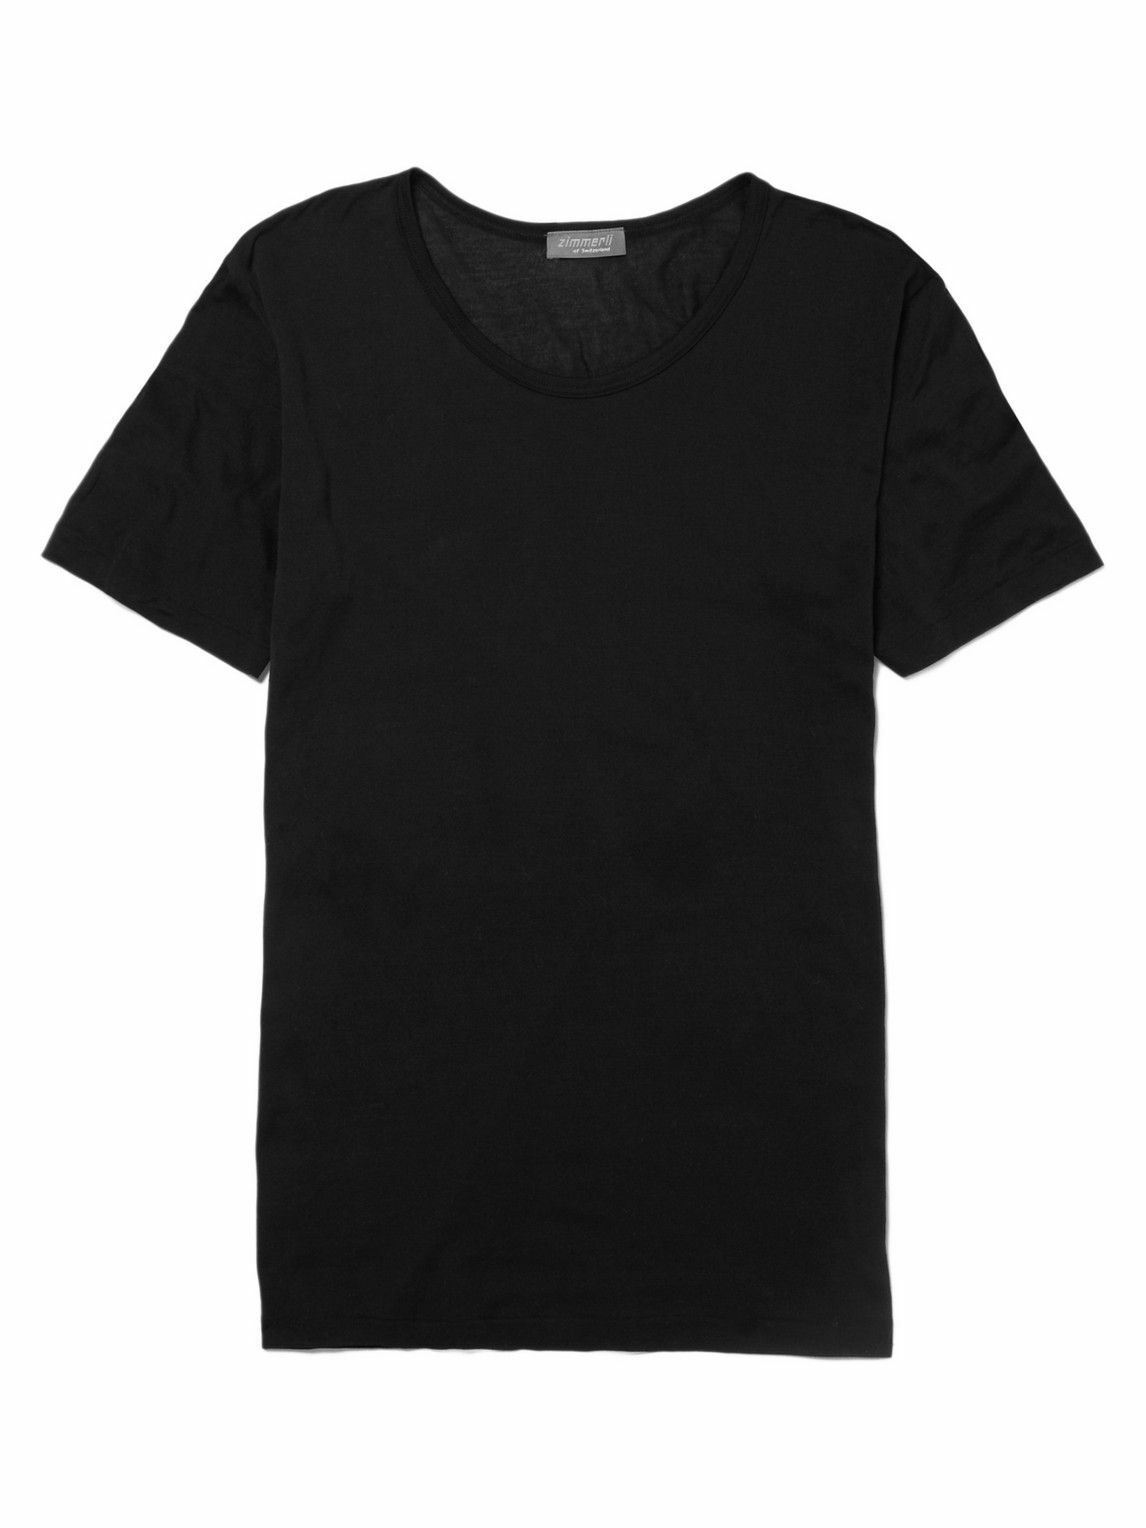 Photo: Zimmerli - Royal Classic Cotton T-Shirt - Black